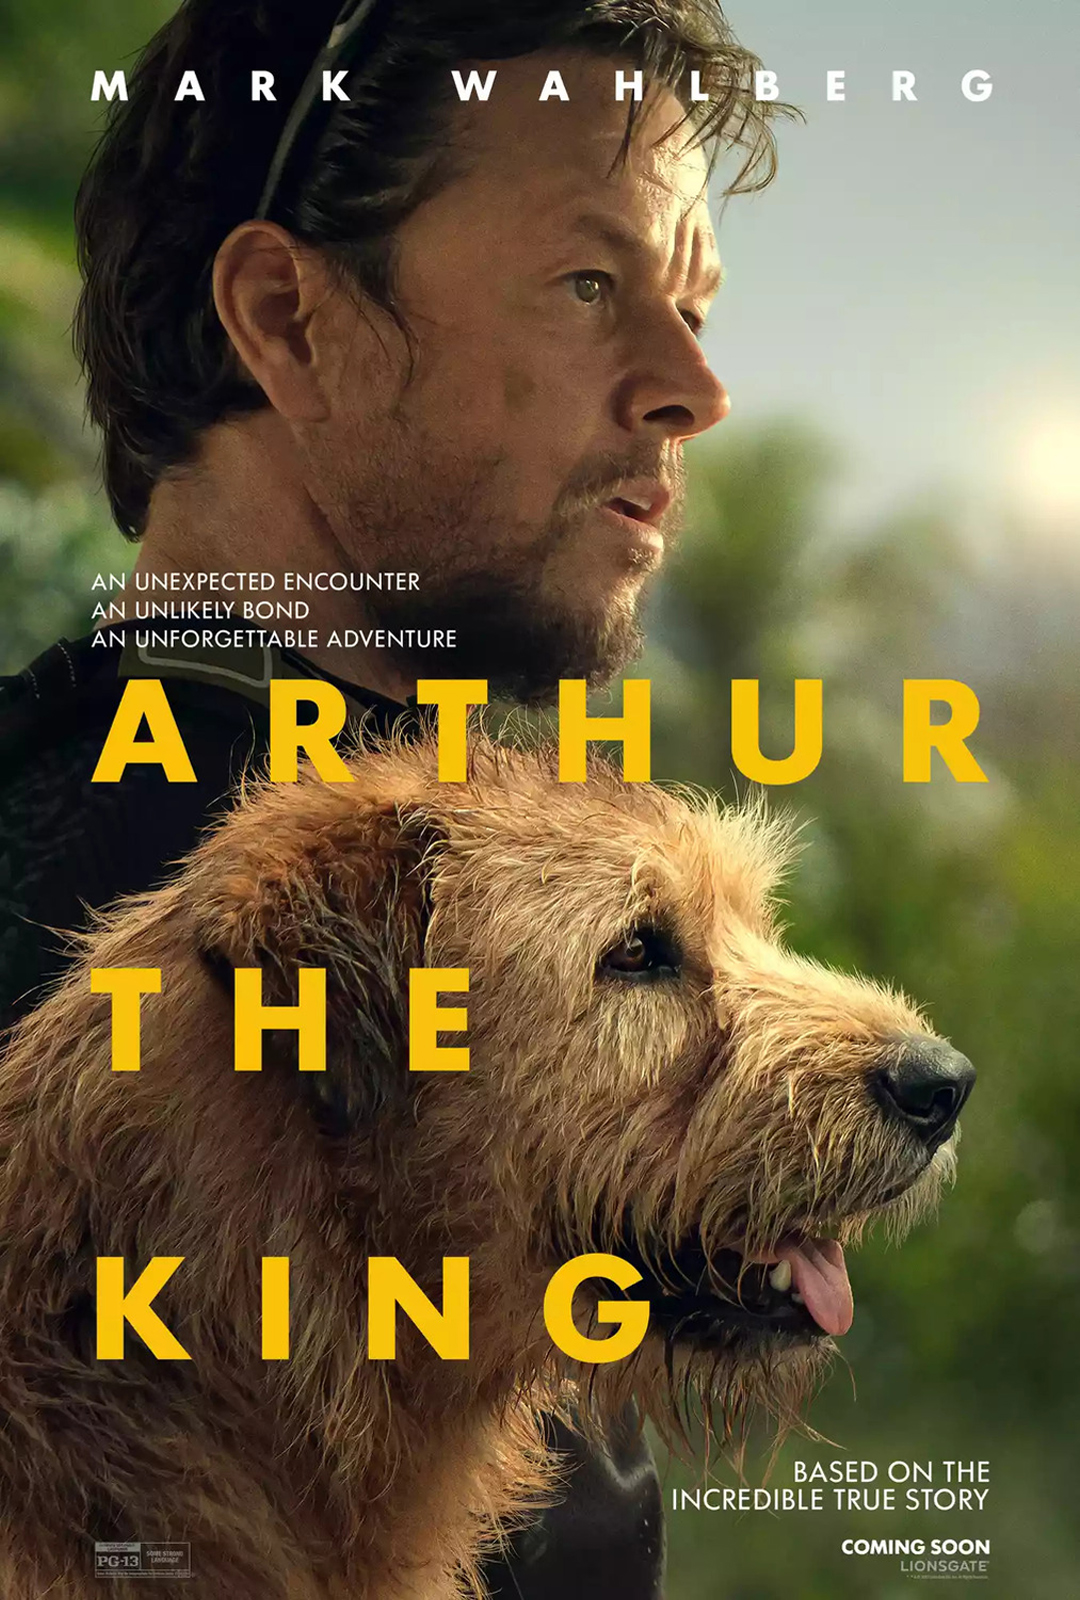 Movie Poster: Arthur